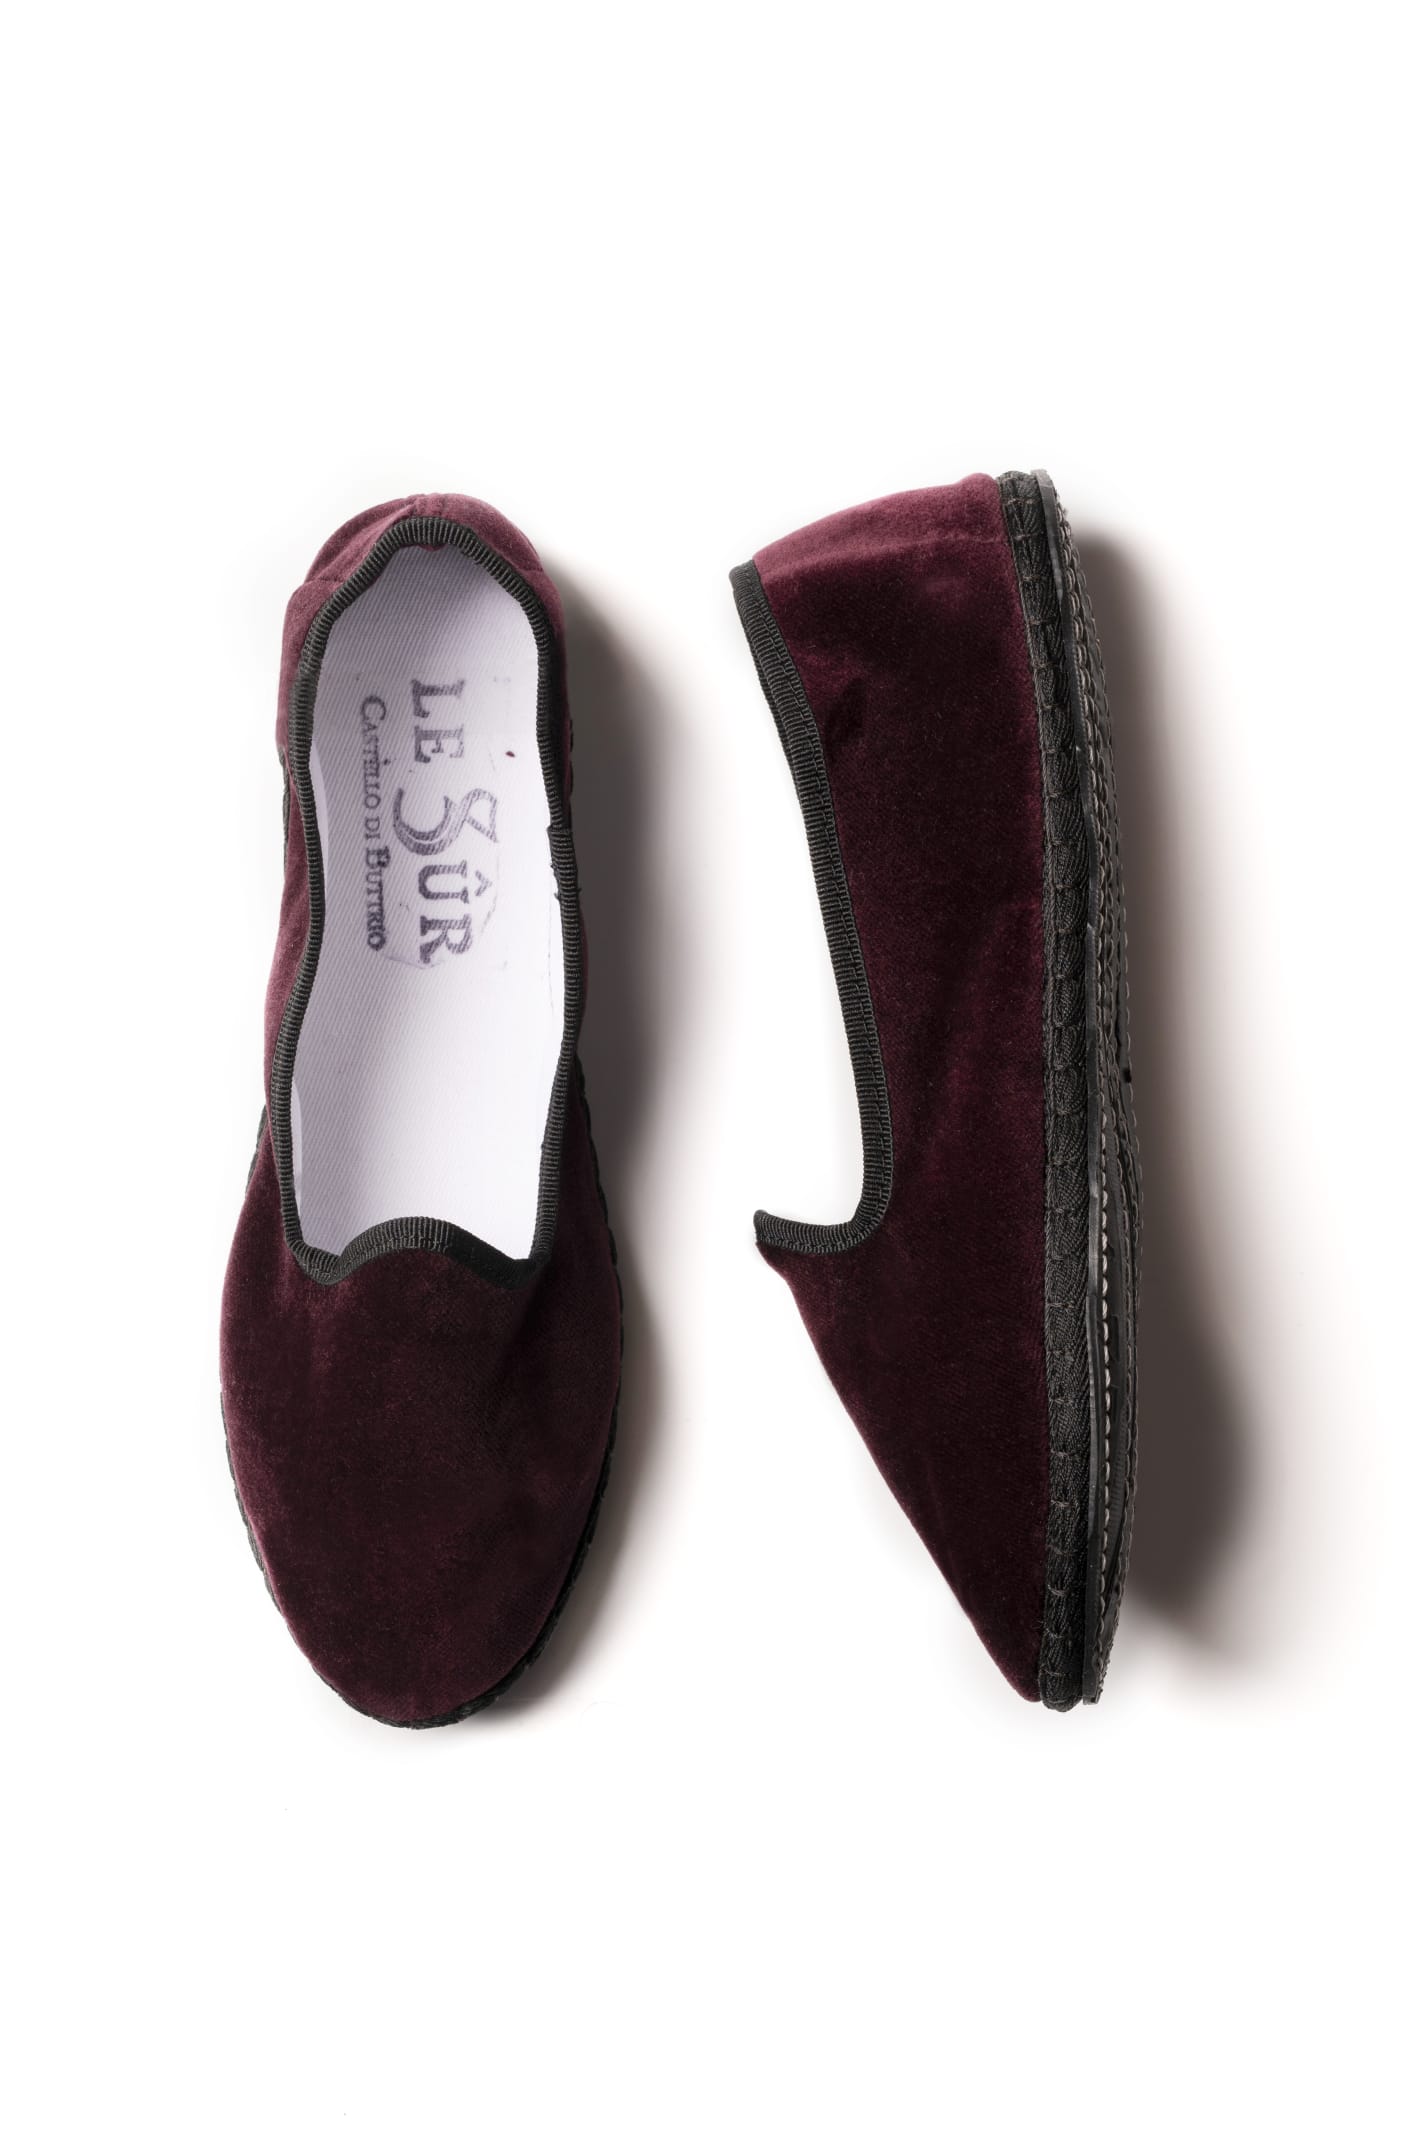 Shop Le Sur Friulana Loafer In Purple & Grey